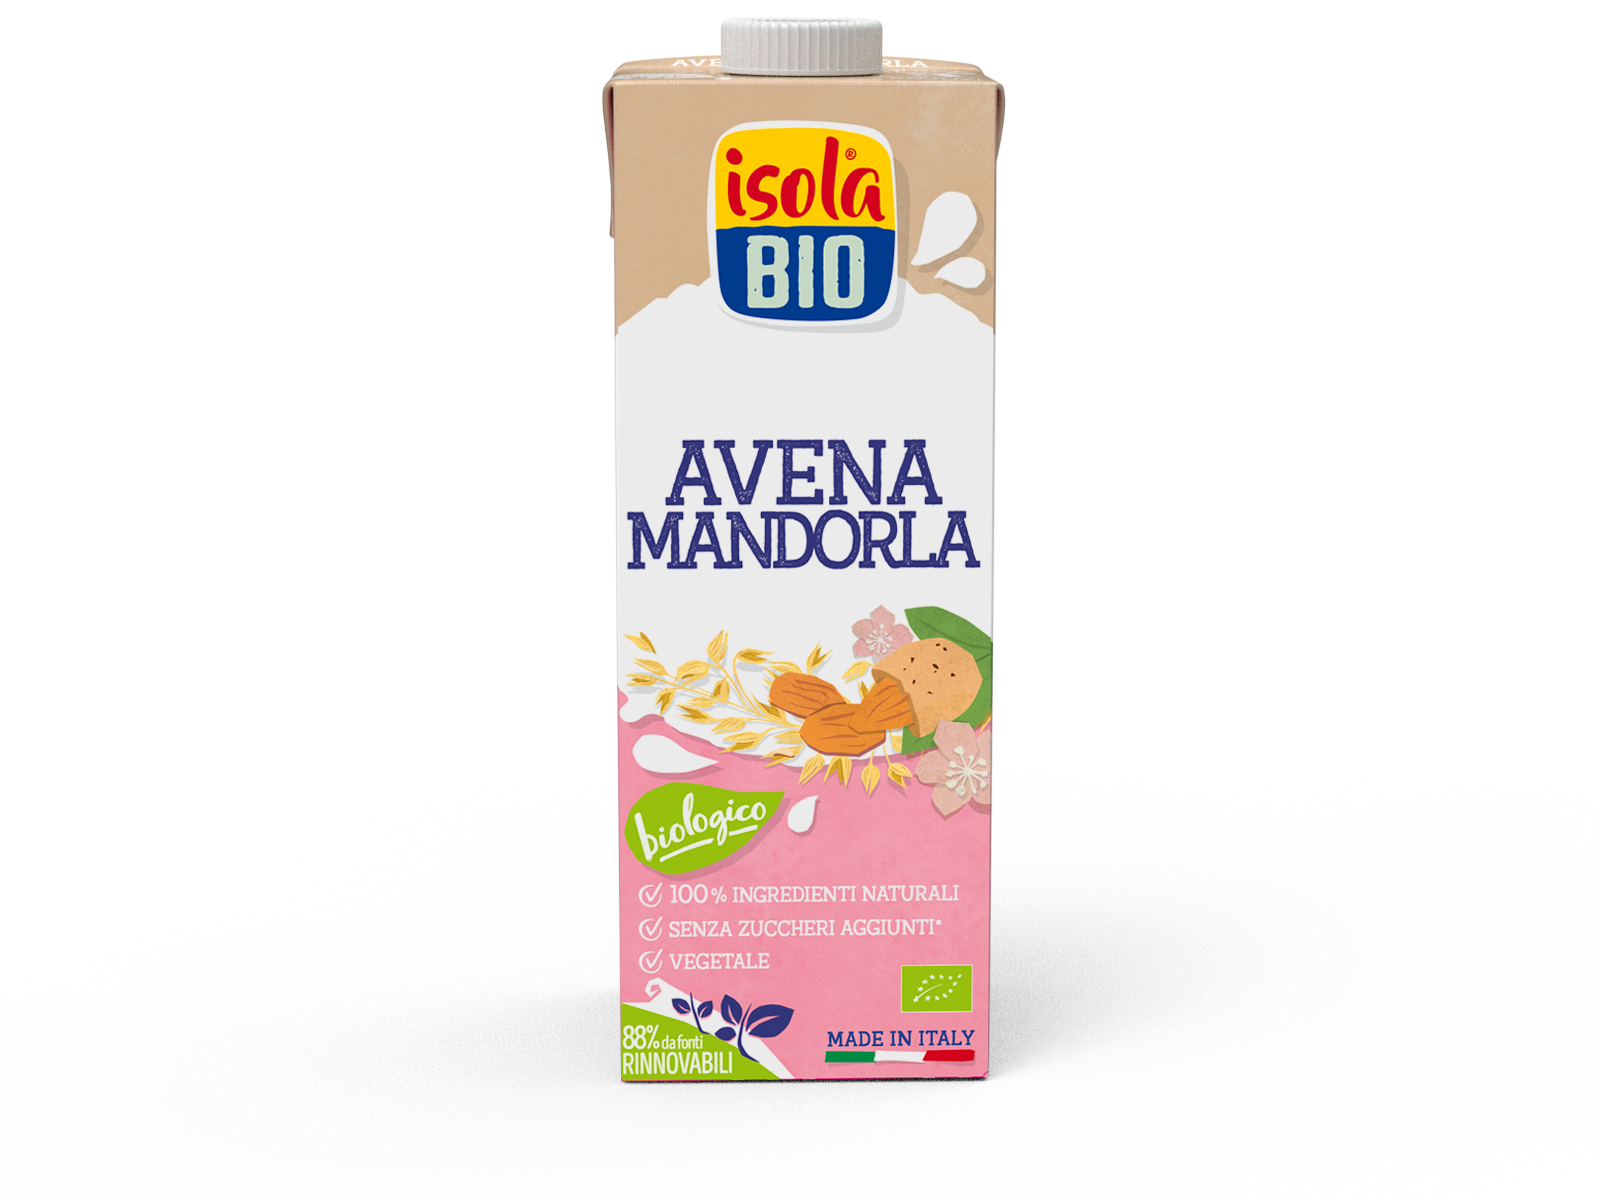 Isola Bio presenta la bevanda Avena Mandorla dal packaging eco